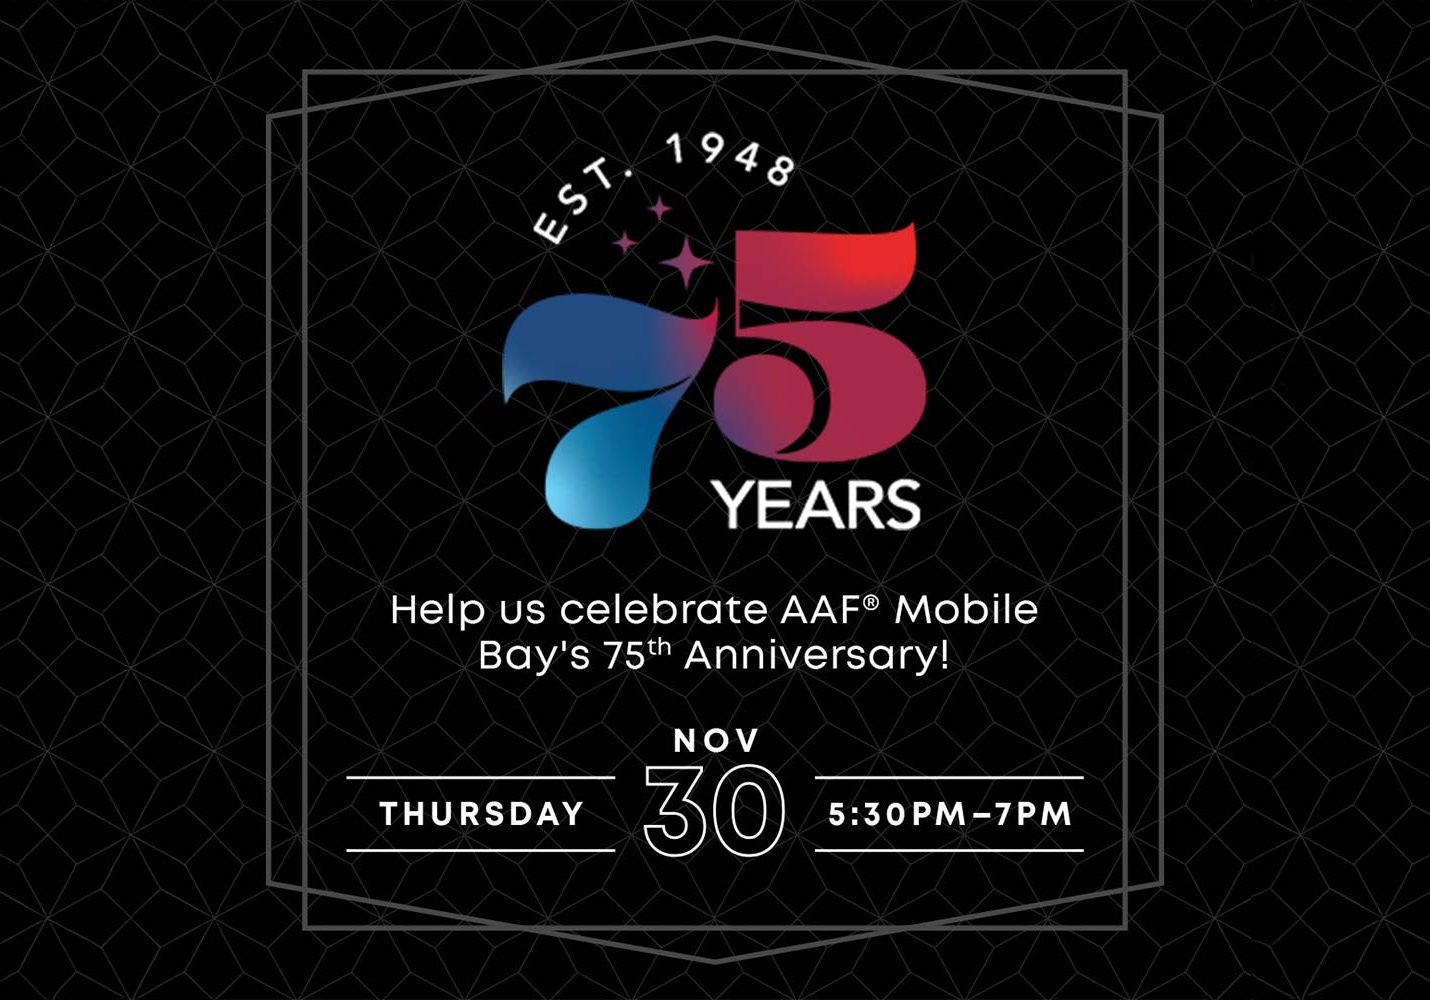 AAF Mobile Bay Celebrates 75 Years